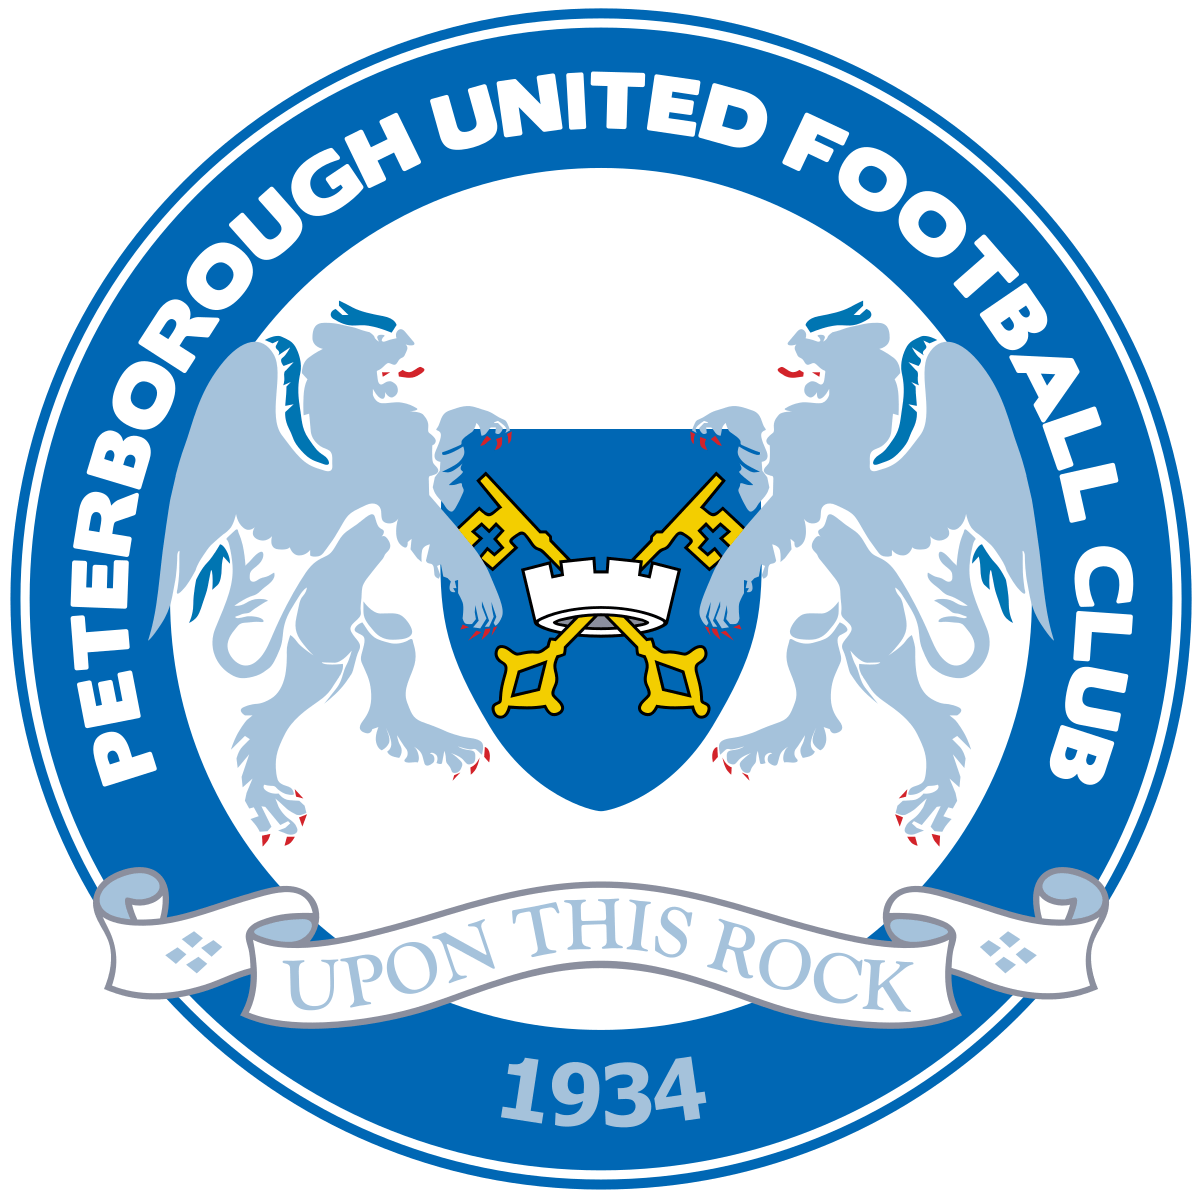 Selco Partnership with Peterborough United